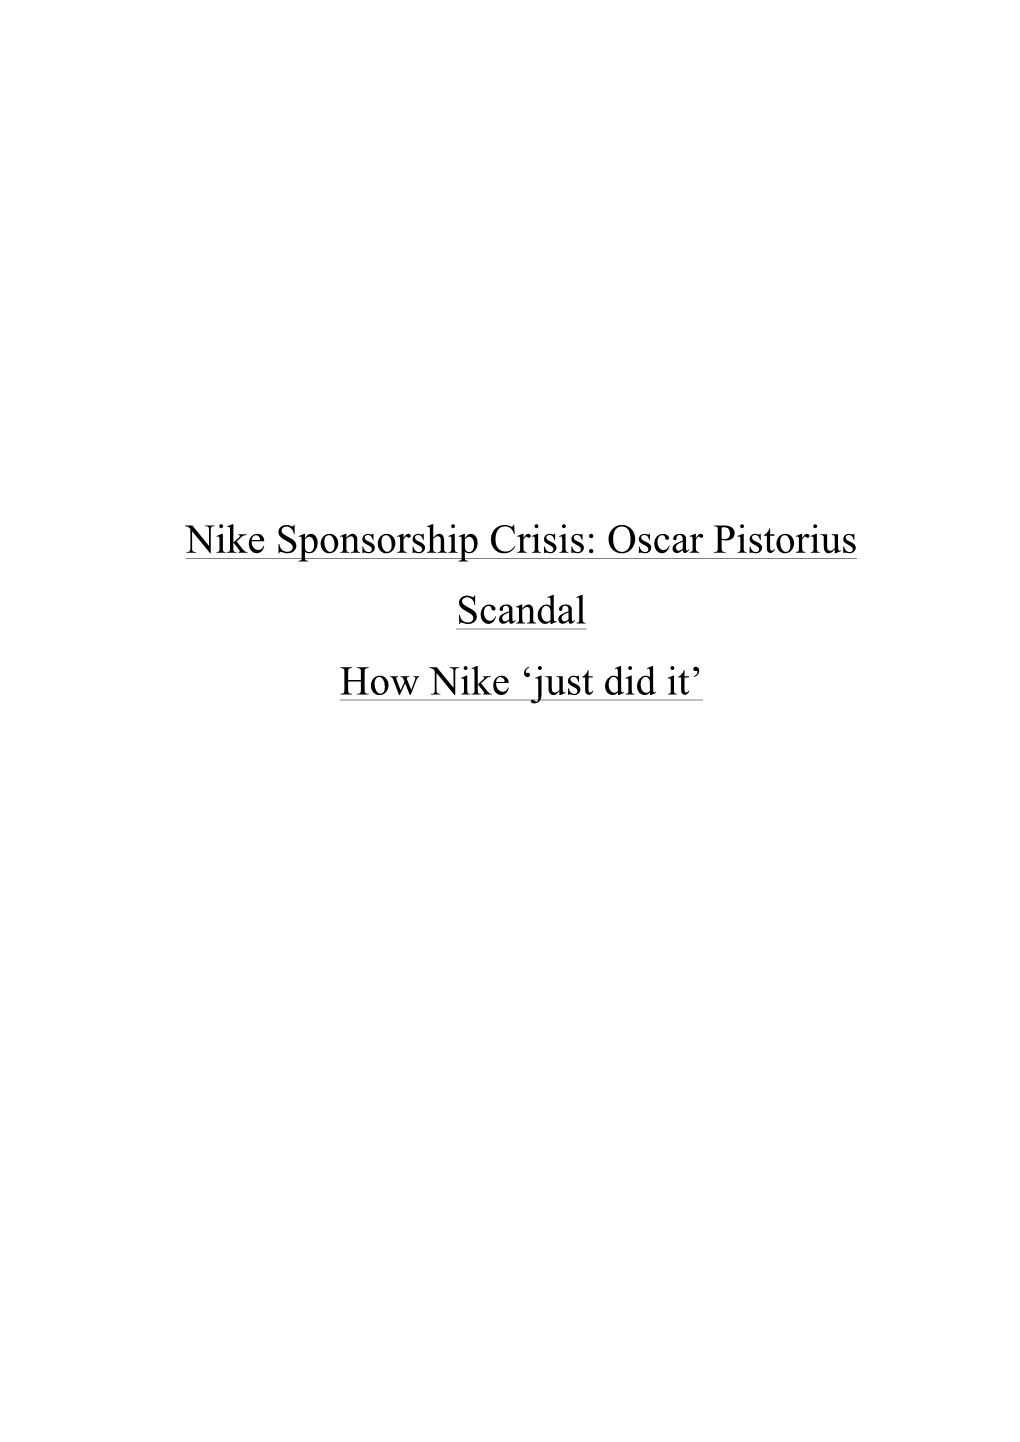 Nike Sponsorship Crisis: Oscar Pistorius Scandal How Nike 'Just Did